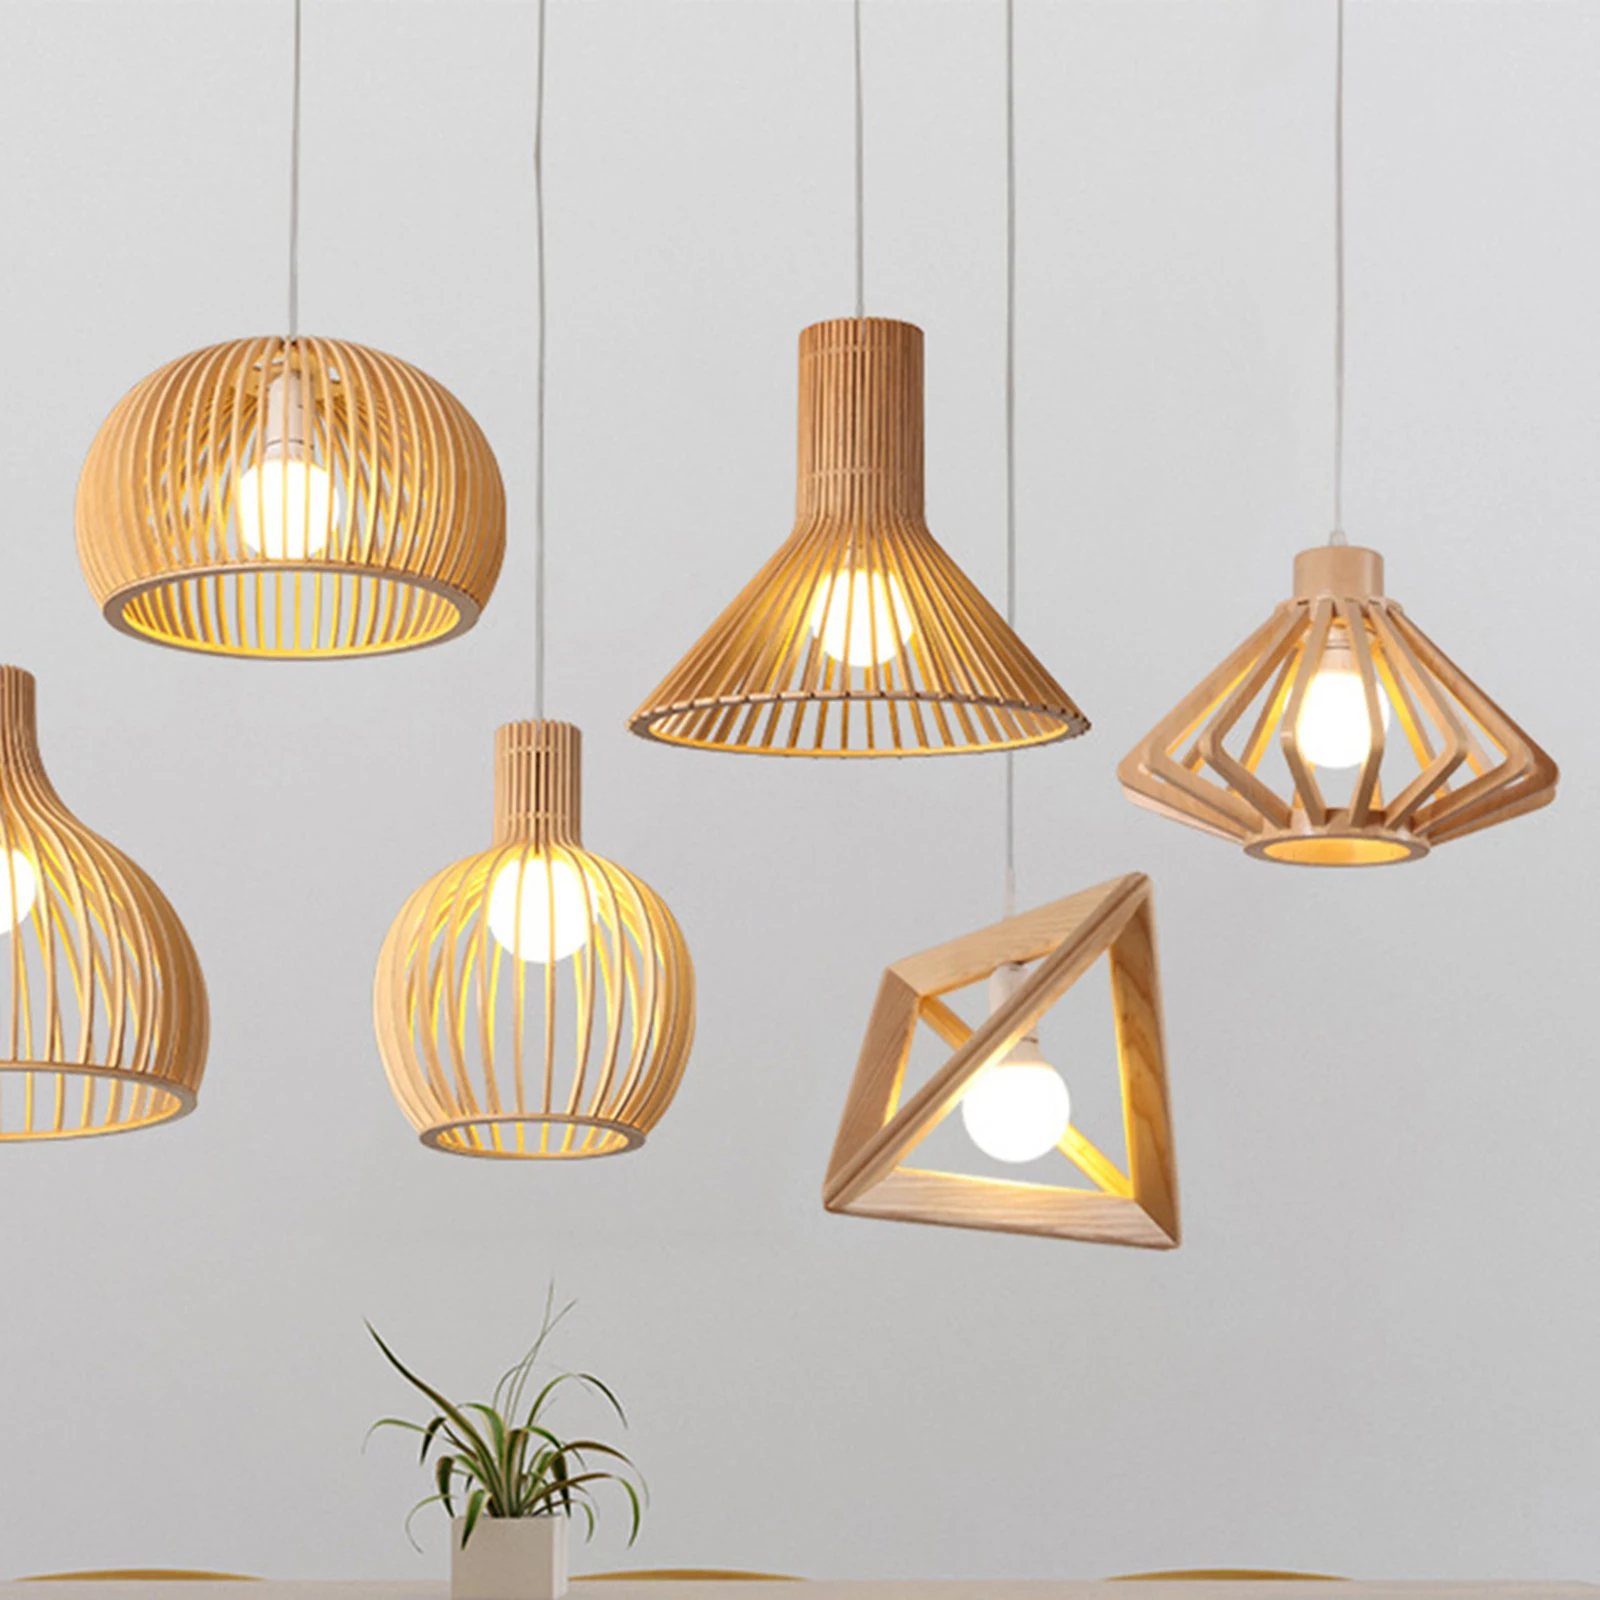 Woven Rattan Decorative LED Pendant Light for Kitchen & Home, Single Natural Wood Handmade Woven Pendant Lights